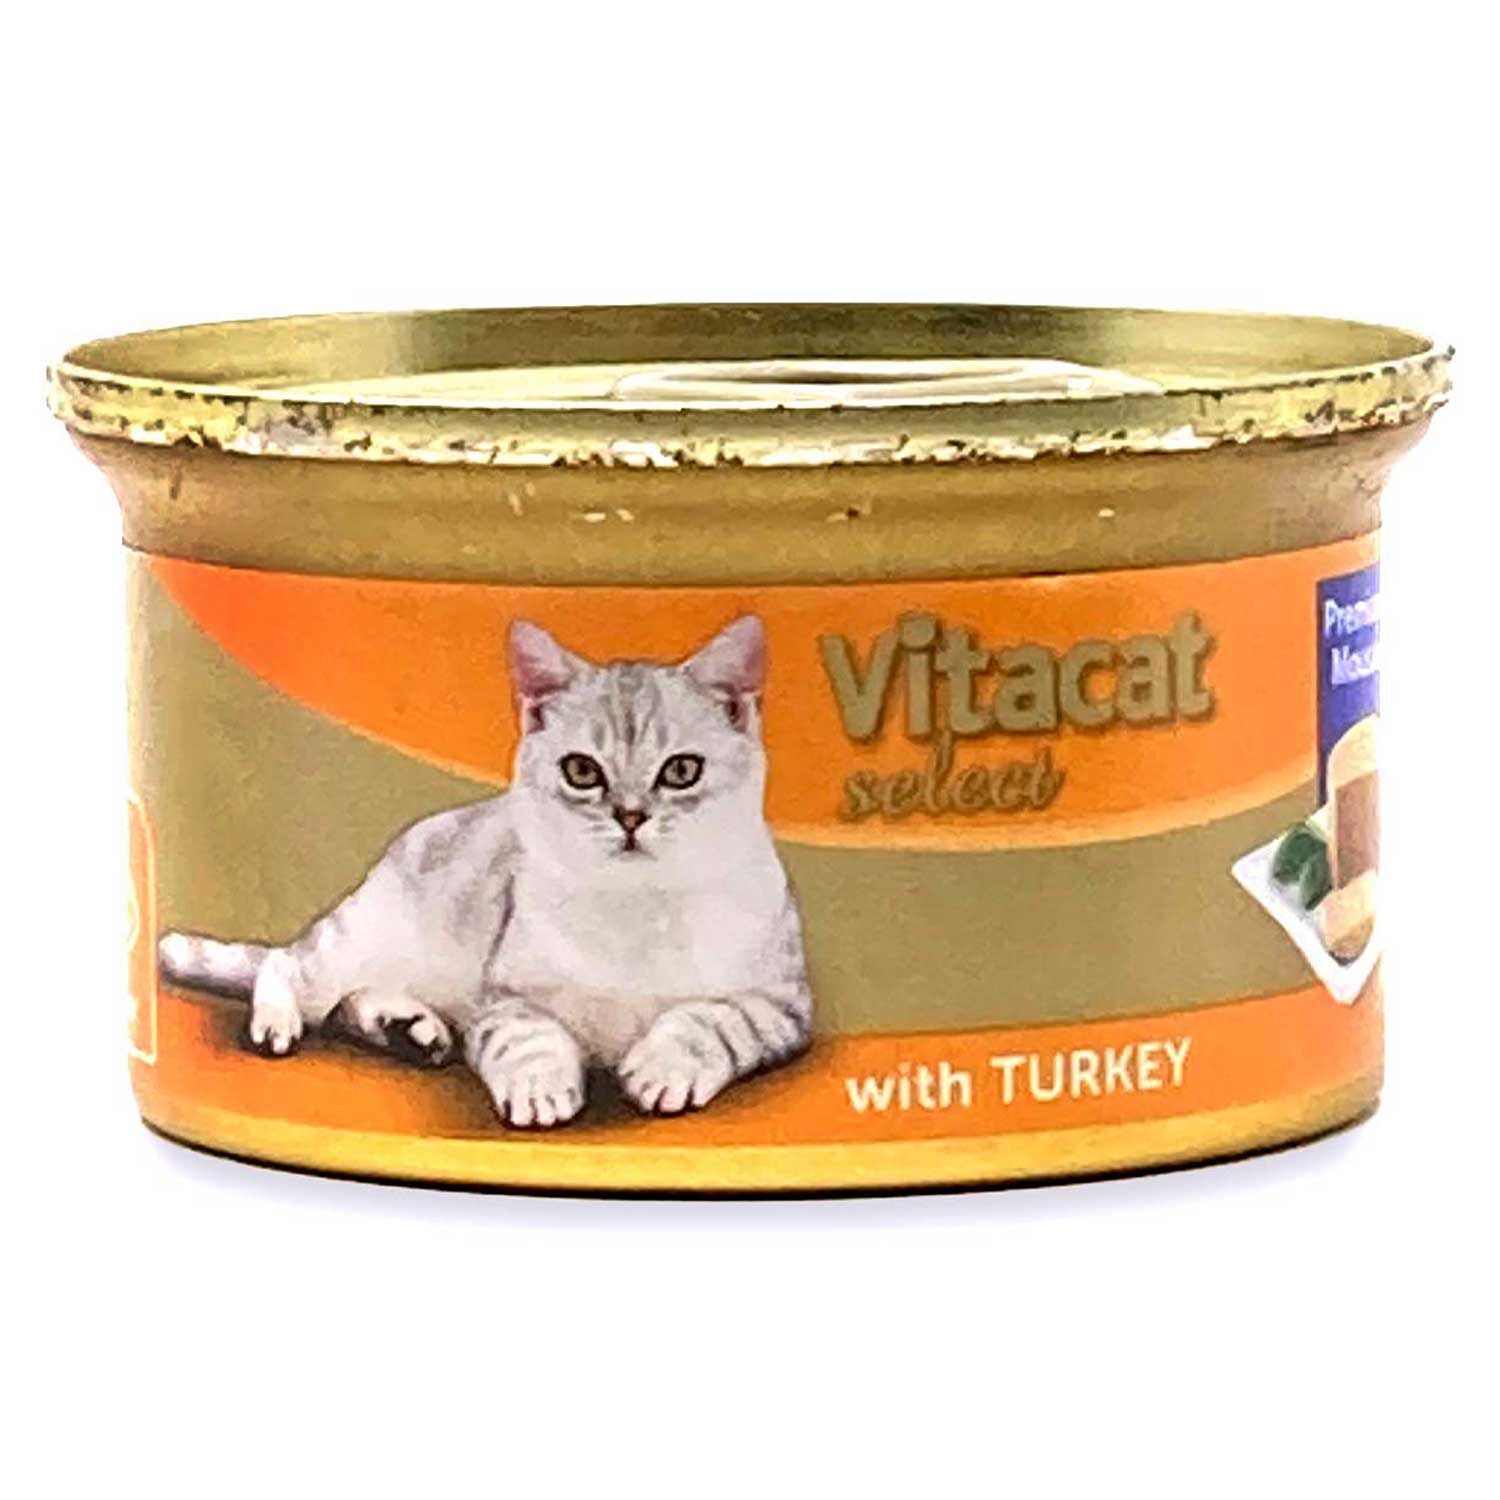 Vitacat Select Gourmet Mousse With Turkey 85g | ALDI